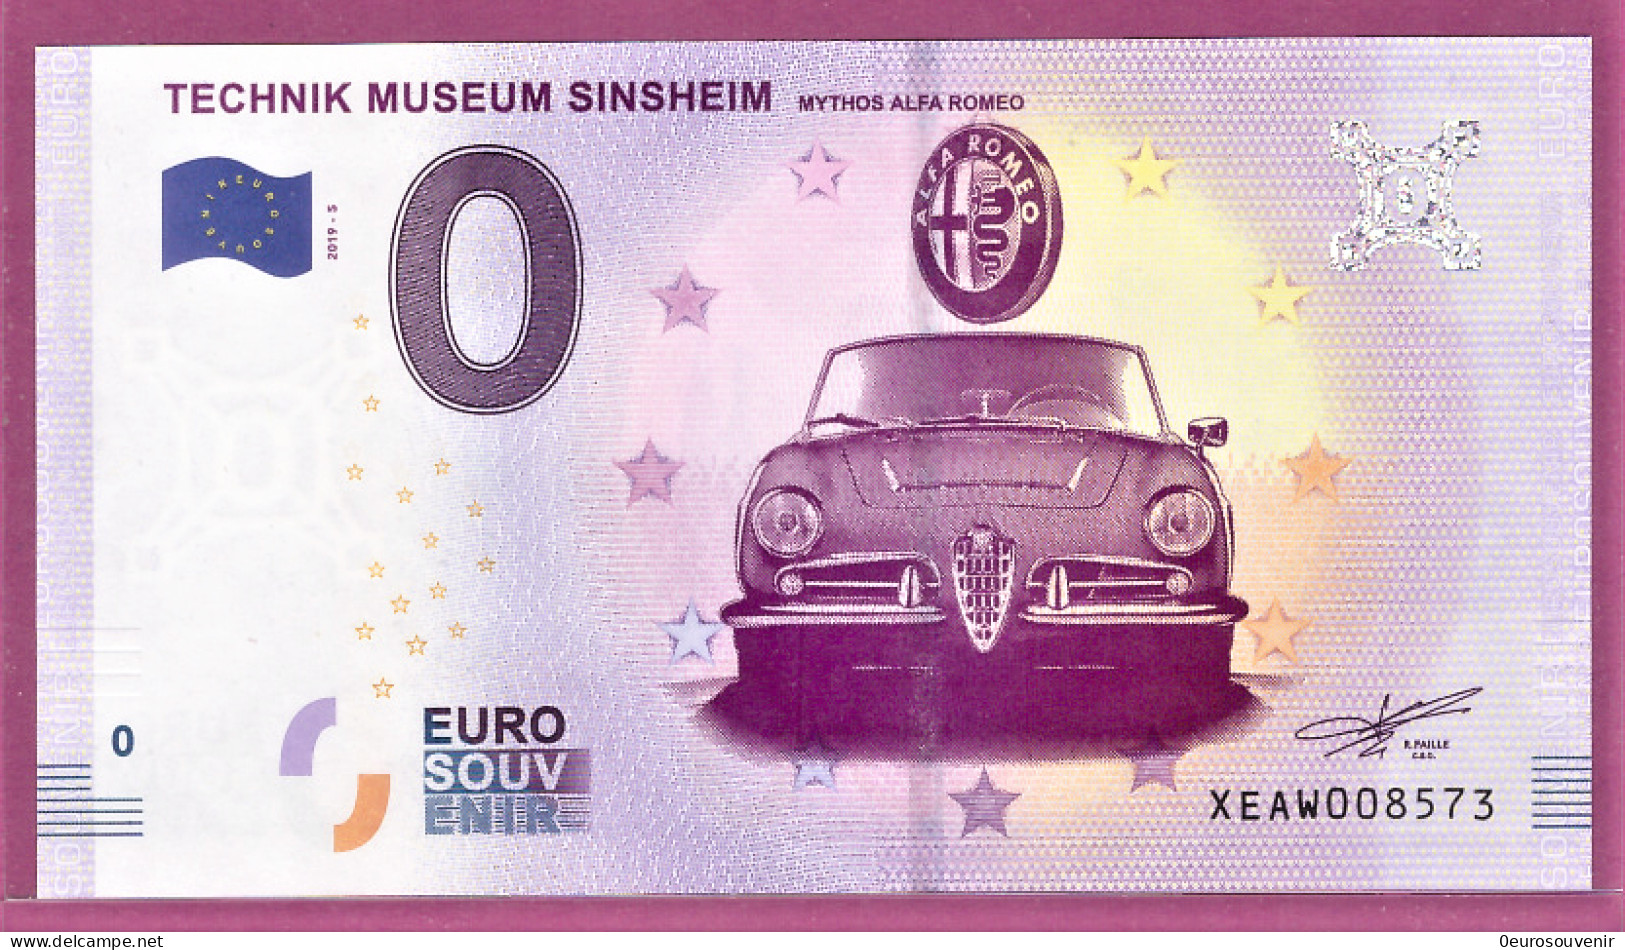 0-Euro XEAW 2019-5 TECHNIK MUSEUM SINSHEIM - MYTHOS ALFA ROMEO - Privatentwürfe